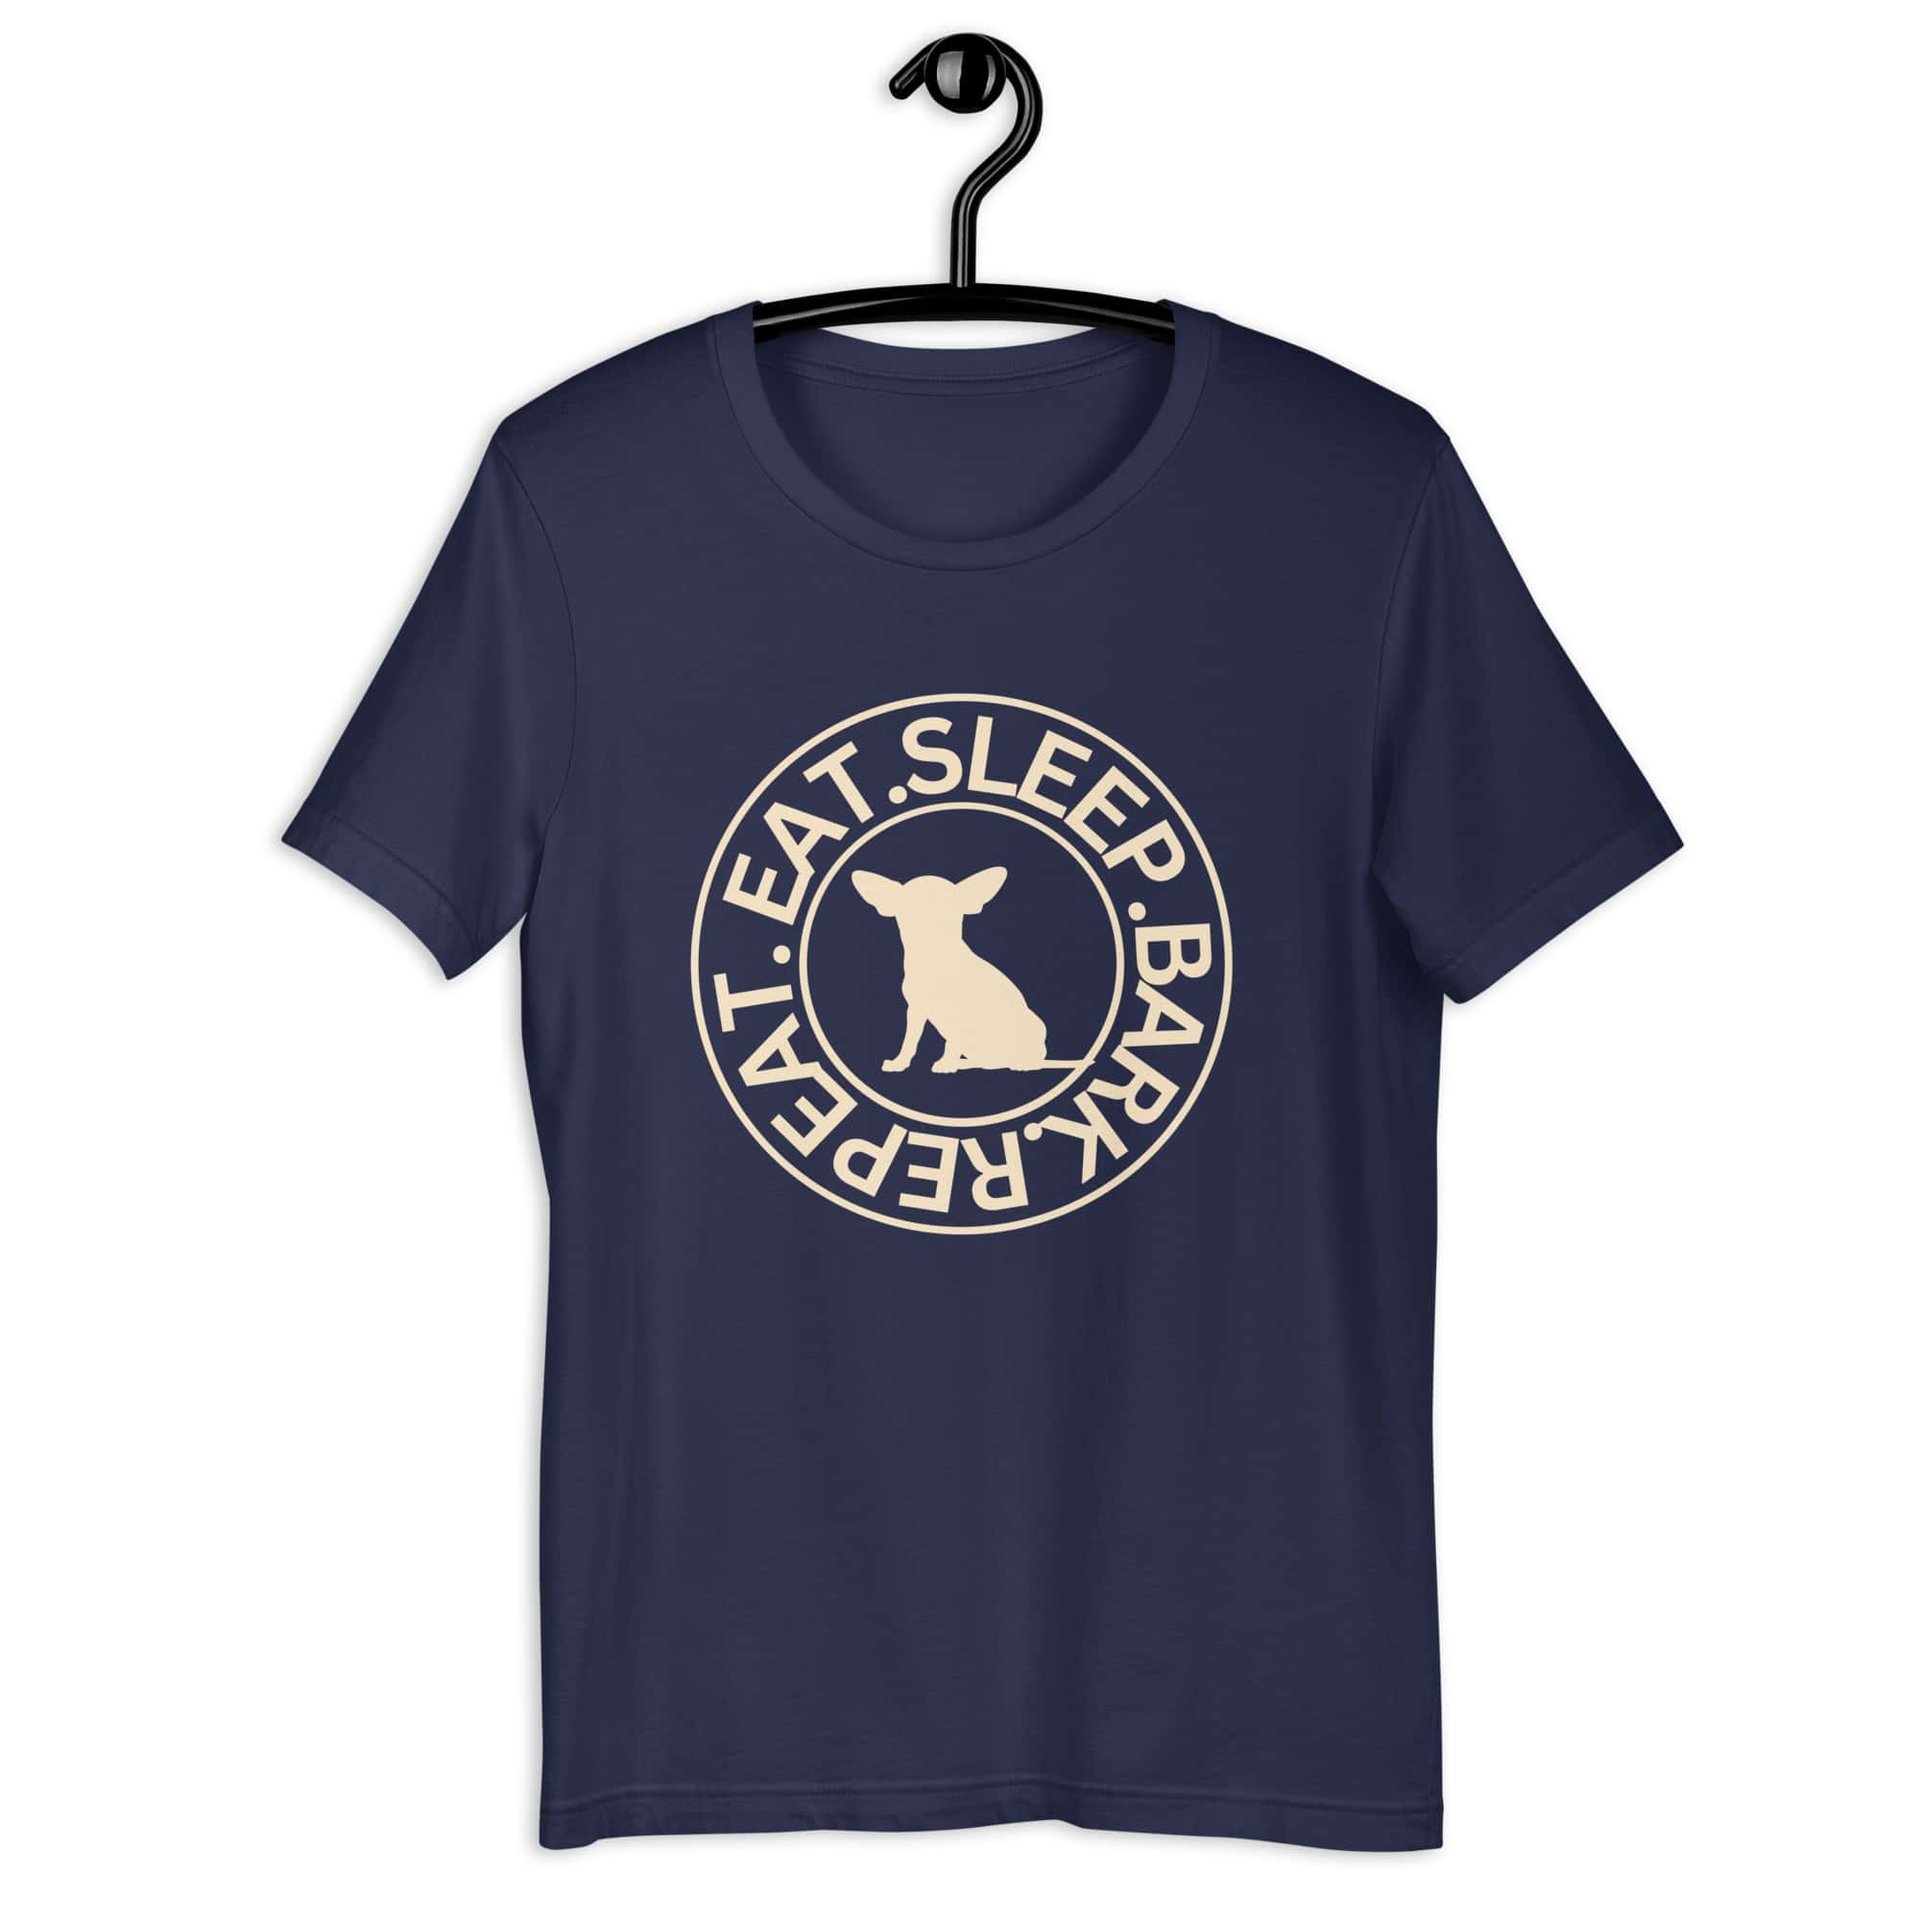 Eat Sleep Bark Repeat Chihuahua Unisex T-Shirt. Navy blue